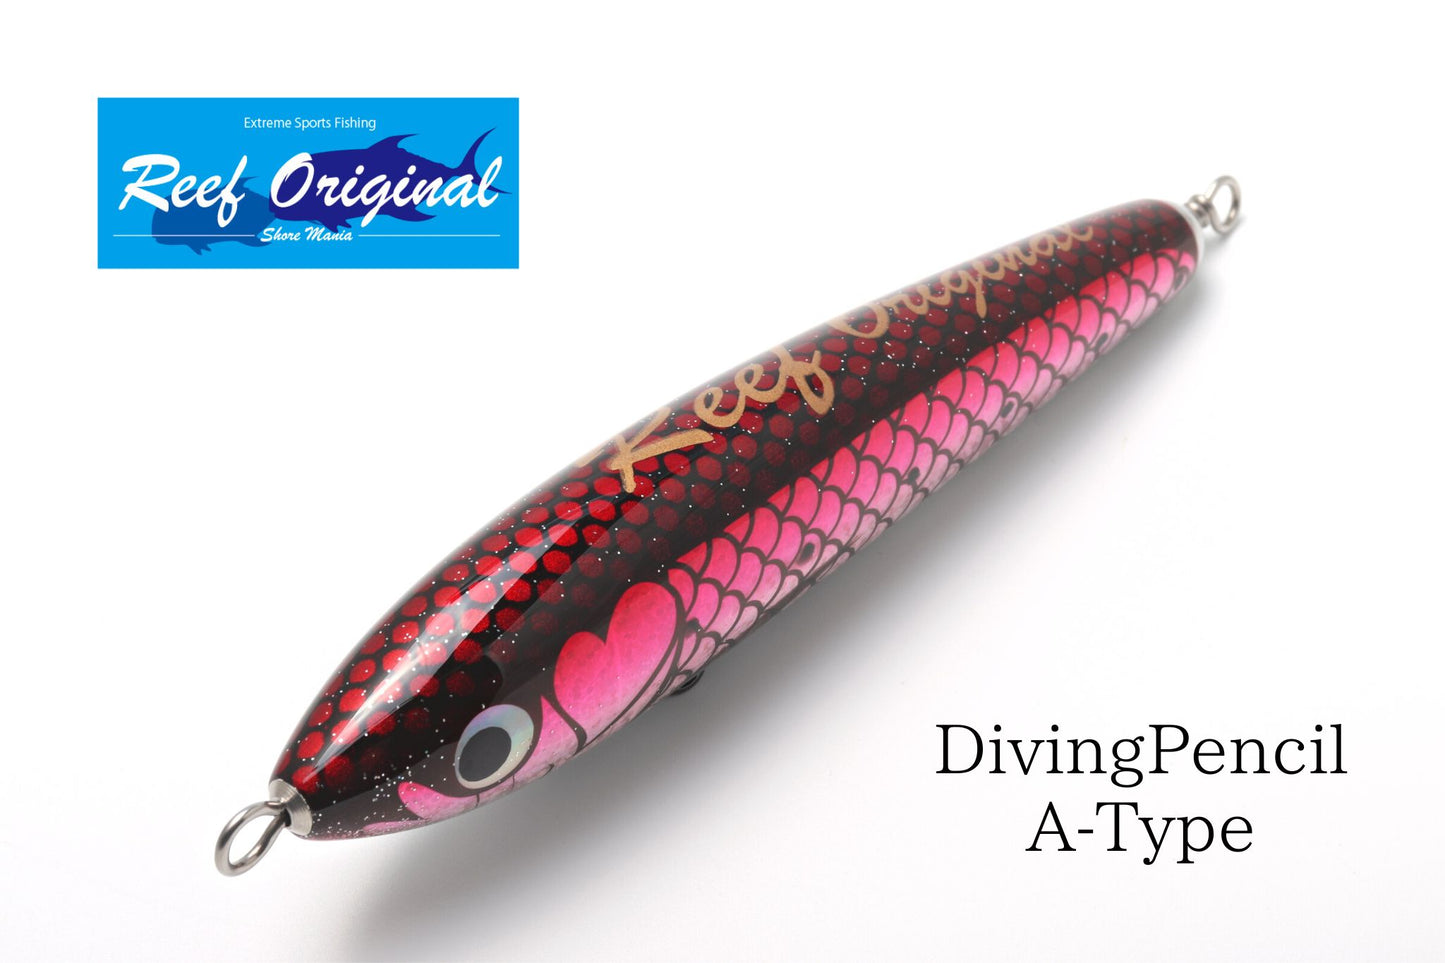 DivingPencil A-Type